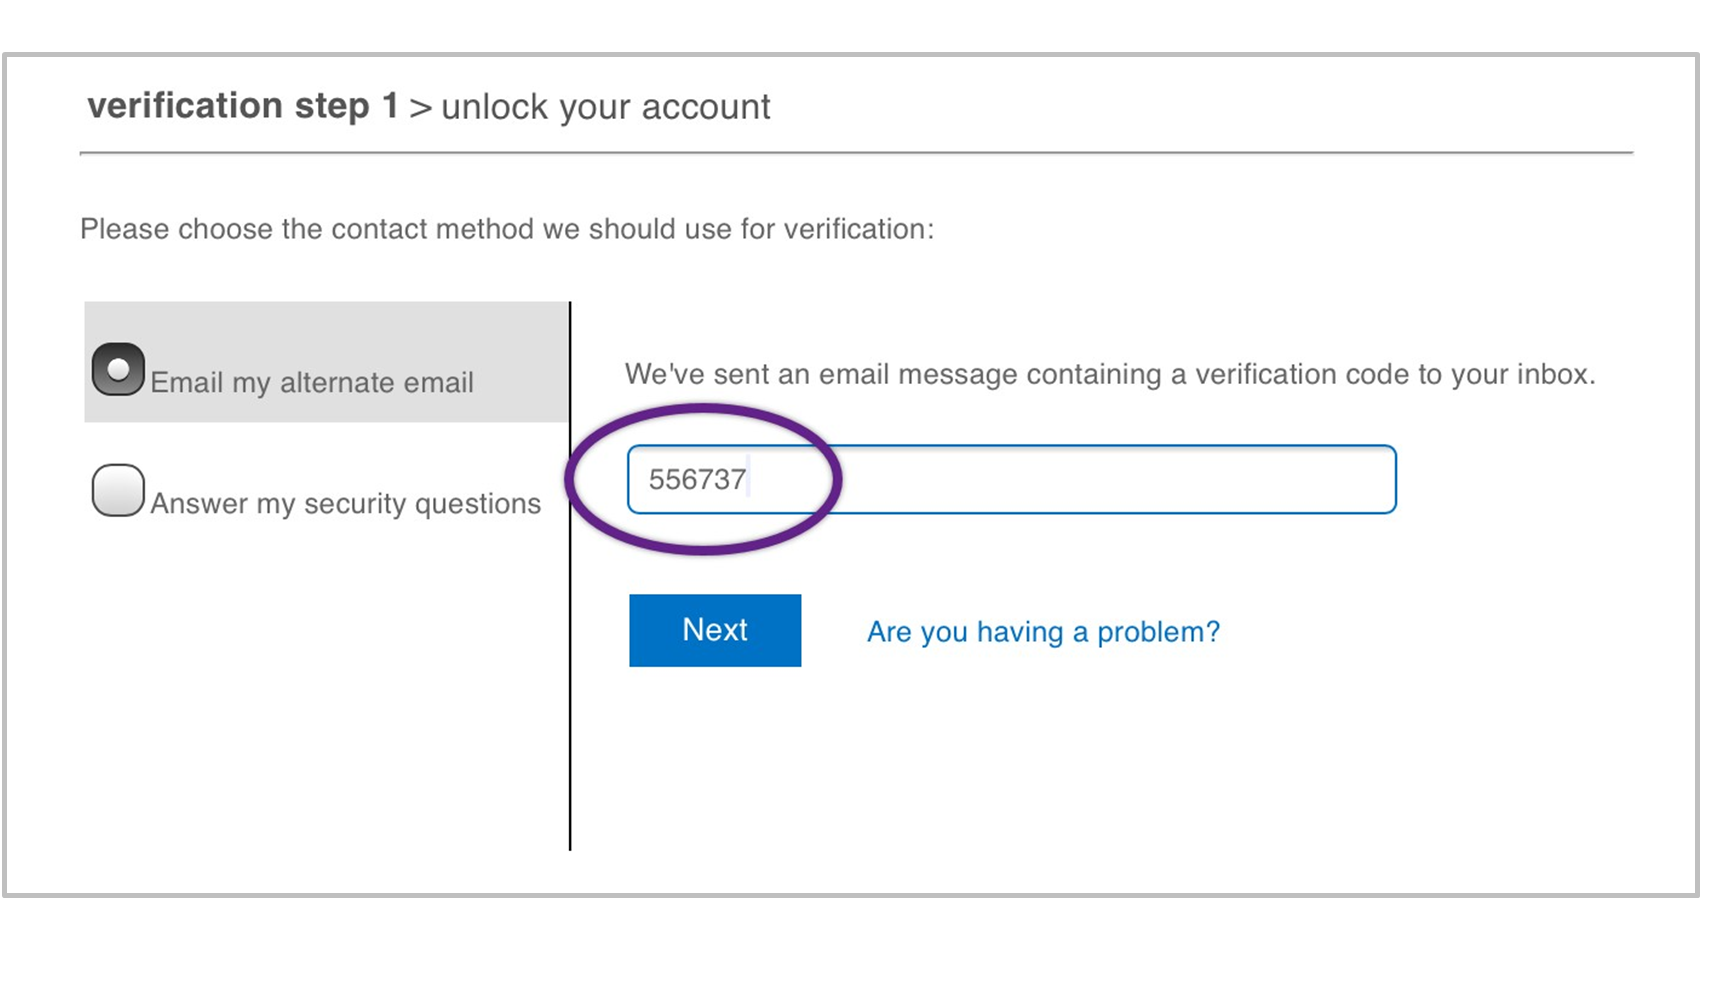 Screenshot of verification step 1 verification code for email